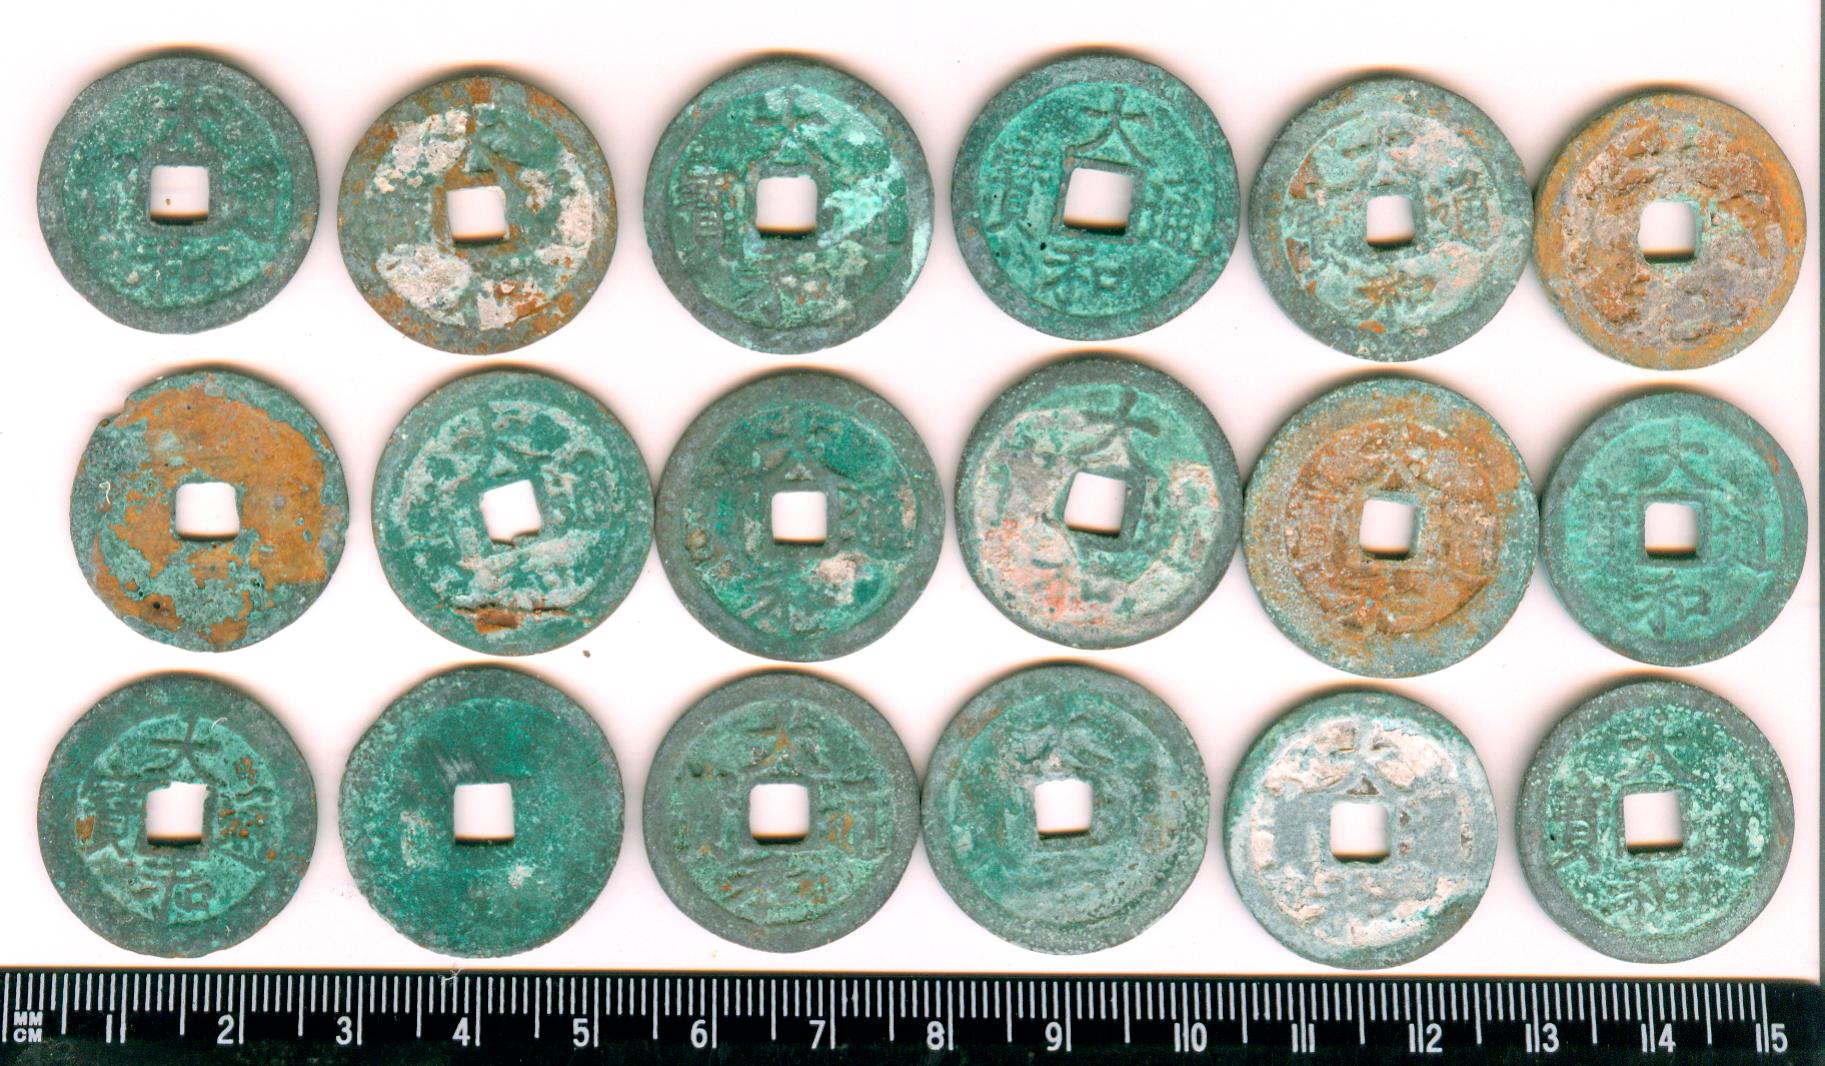 V2059, Annam 18 Pcs Thai-Hoa Thong-Bao Coins (Da-He Tong-Bao), AD 1443